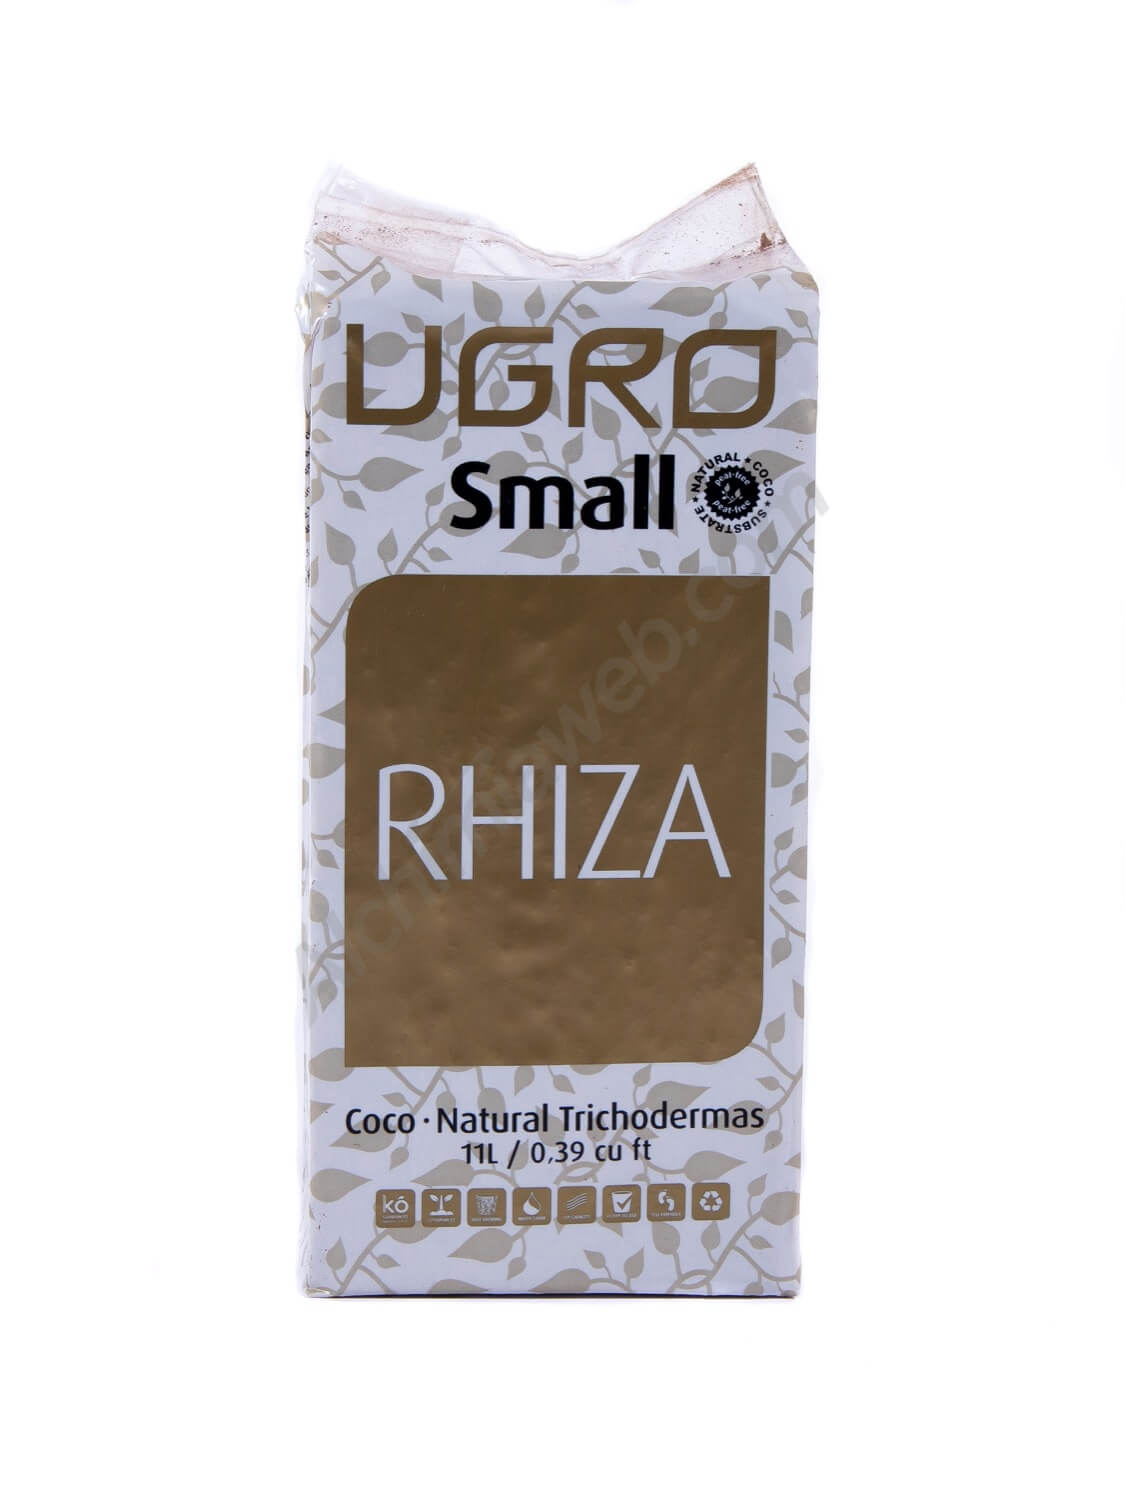 Small Rhiza UGro. Pressed Cocopeat with mycorrhizae